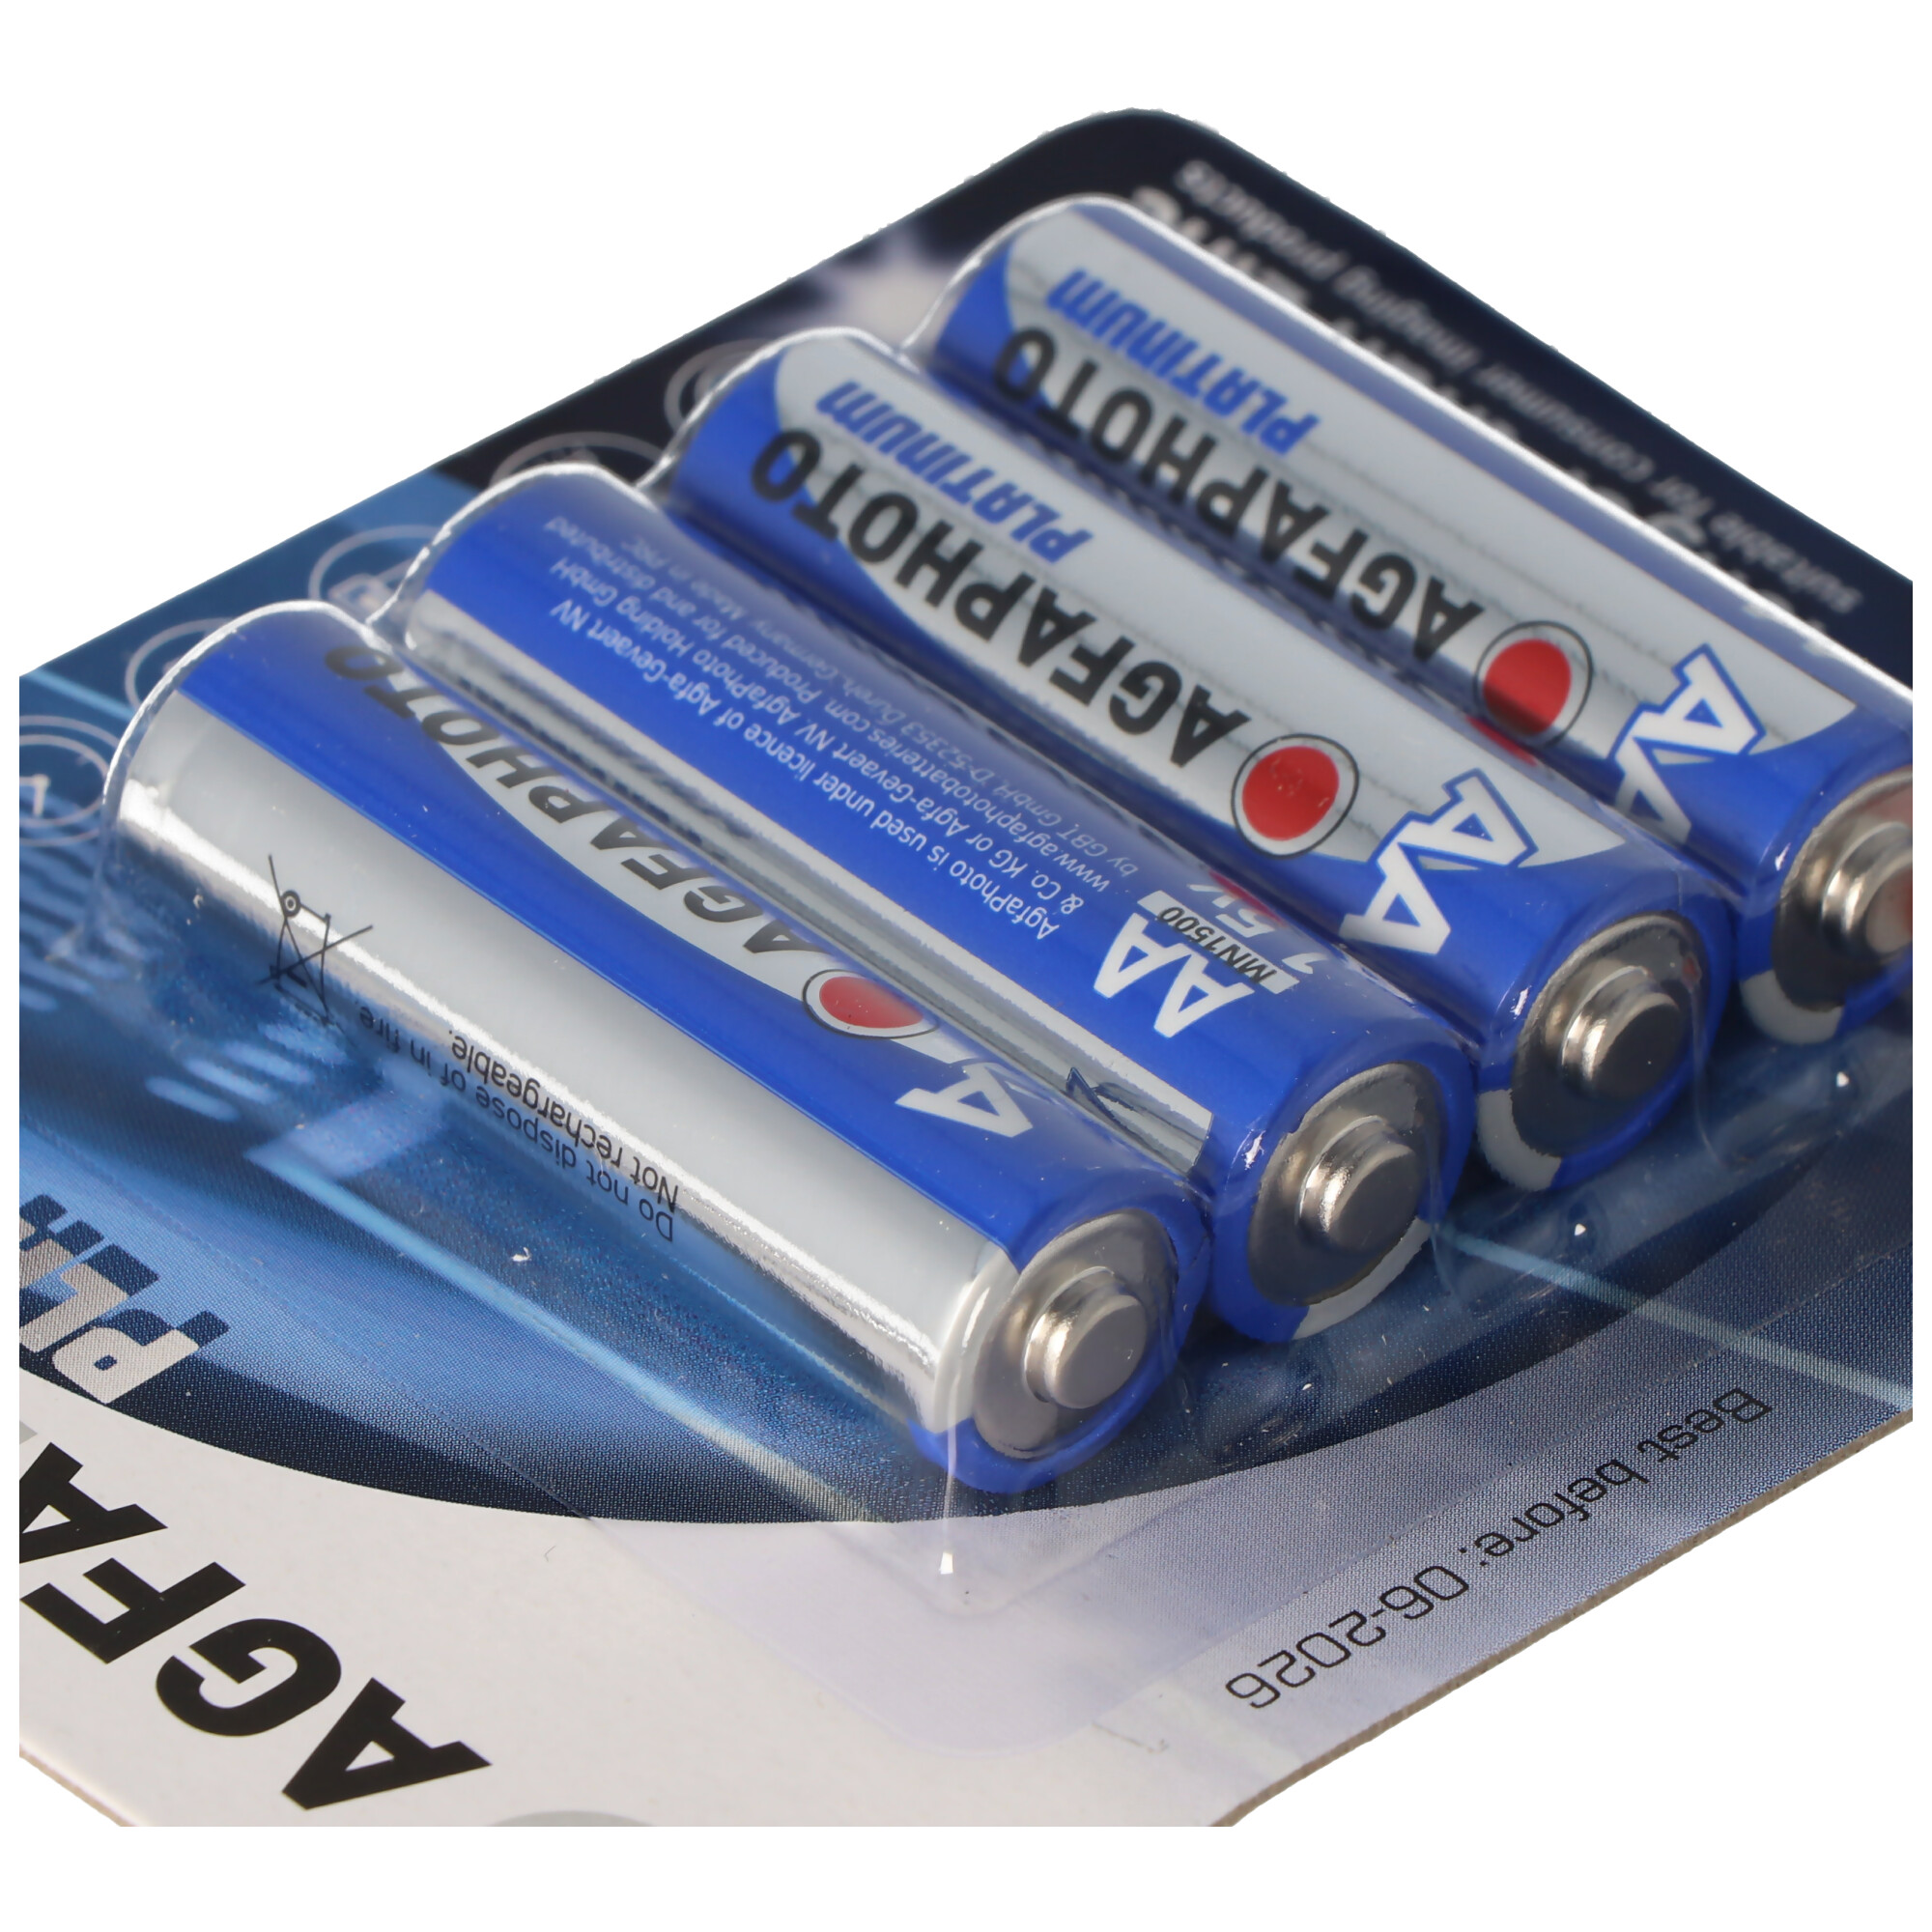 12x AgfaPhoto LR06 Mignon AA-Batterie Alkali-Mangan 1.5 Volt 4 Stück Platinum